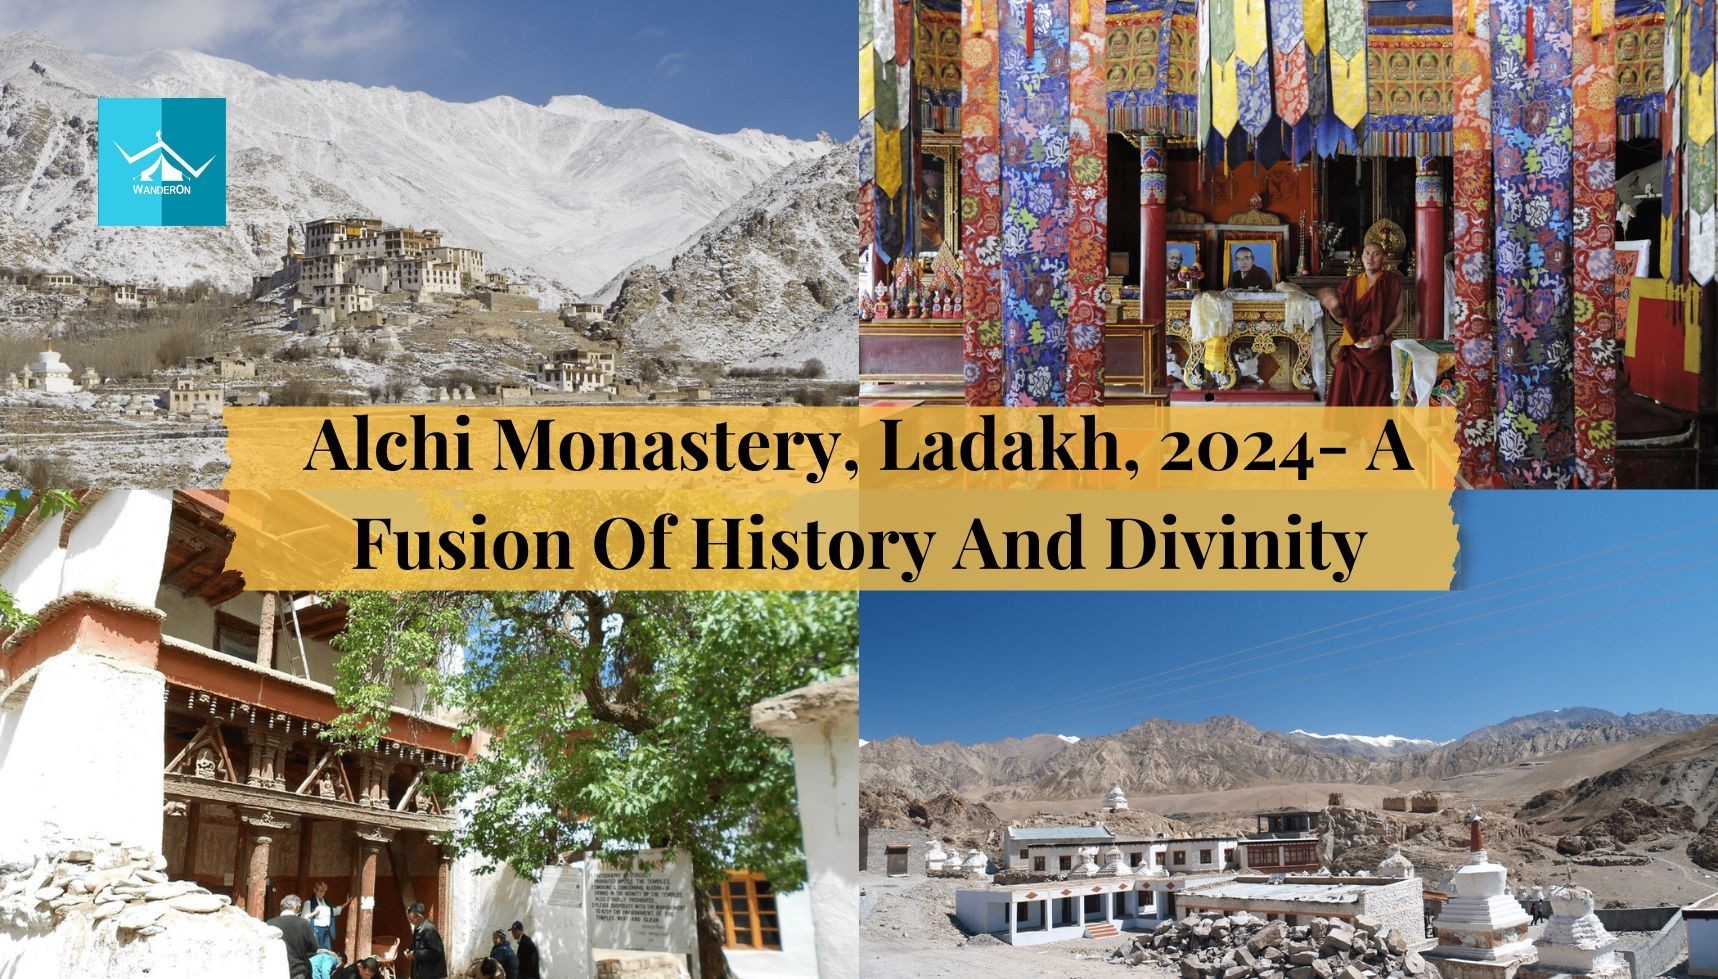 Alchi Monastery, Ladakh, 2024: A Fusion of History and Divinity